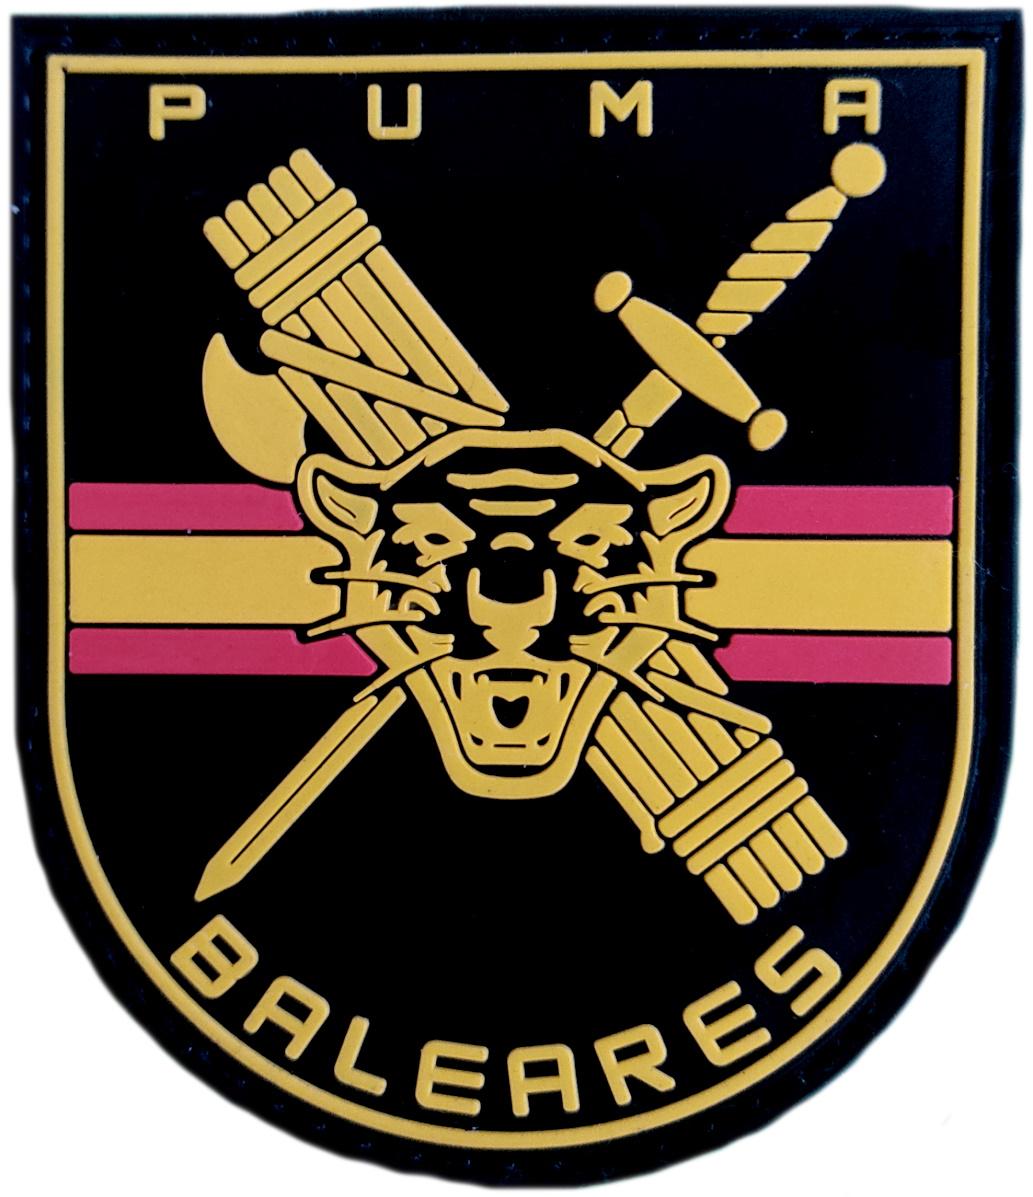 Guardia Civil Usecic Baleares Puma parche insignia emblema distintivo